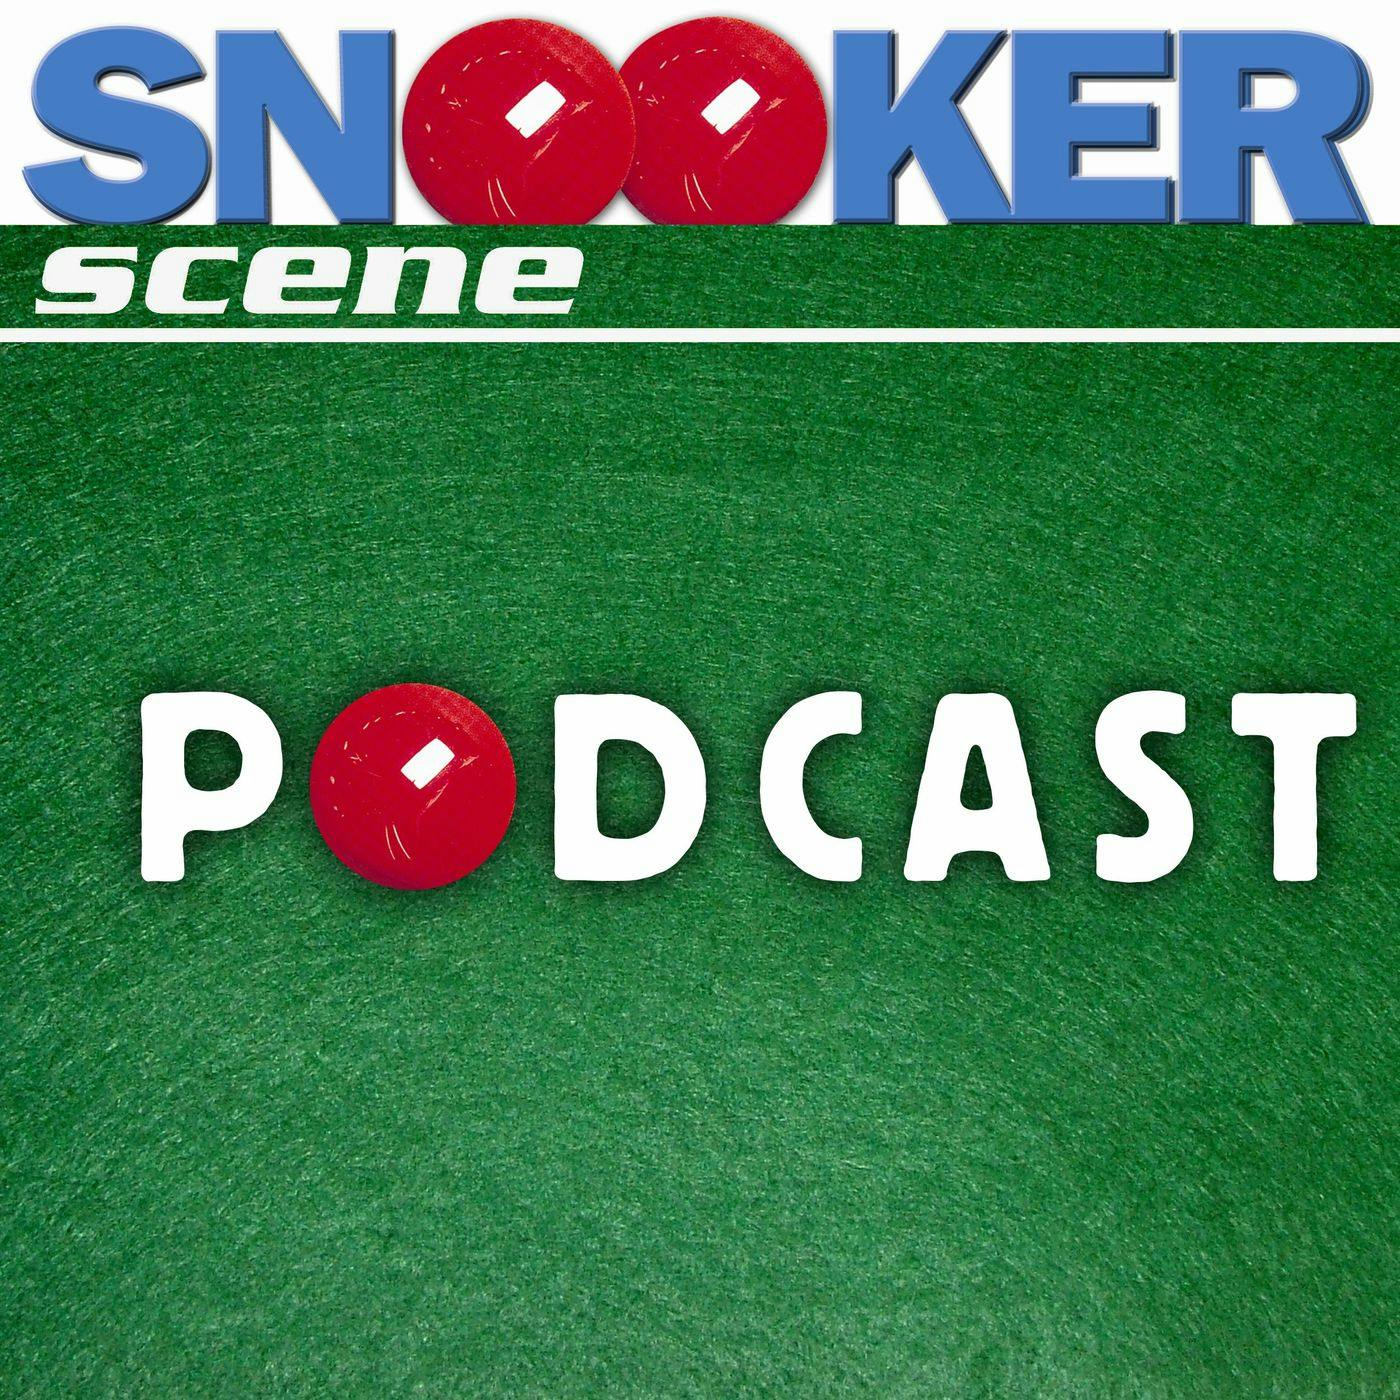 Snooker Scene Podcast episode 57 - Snooker player bingo returns